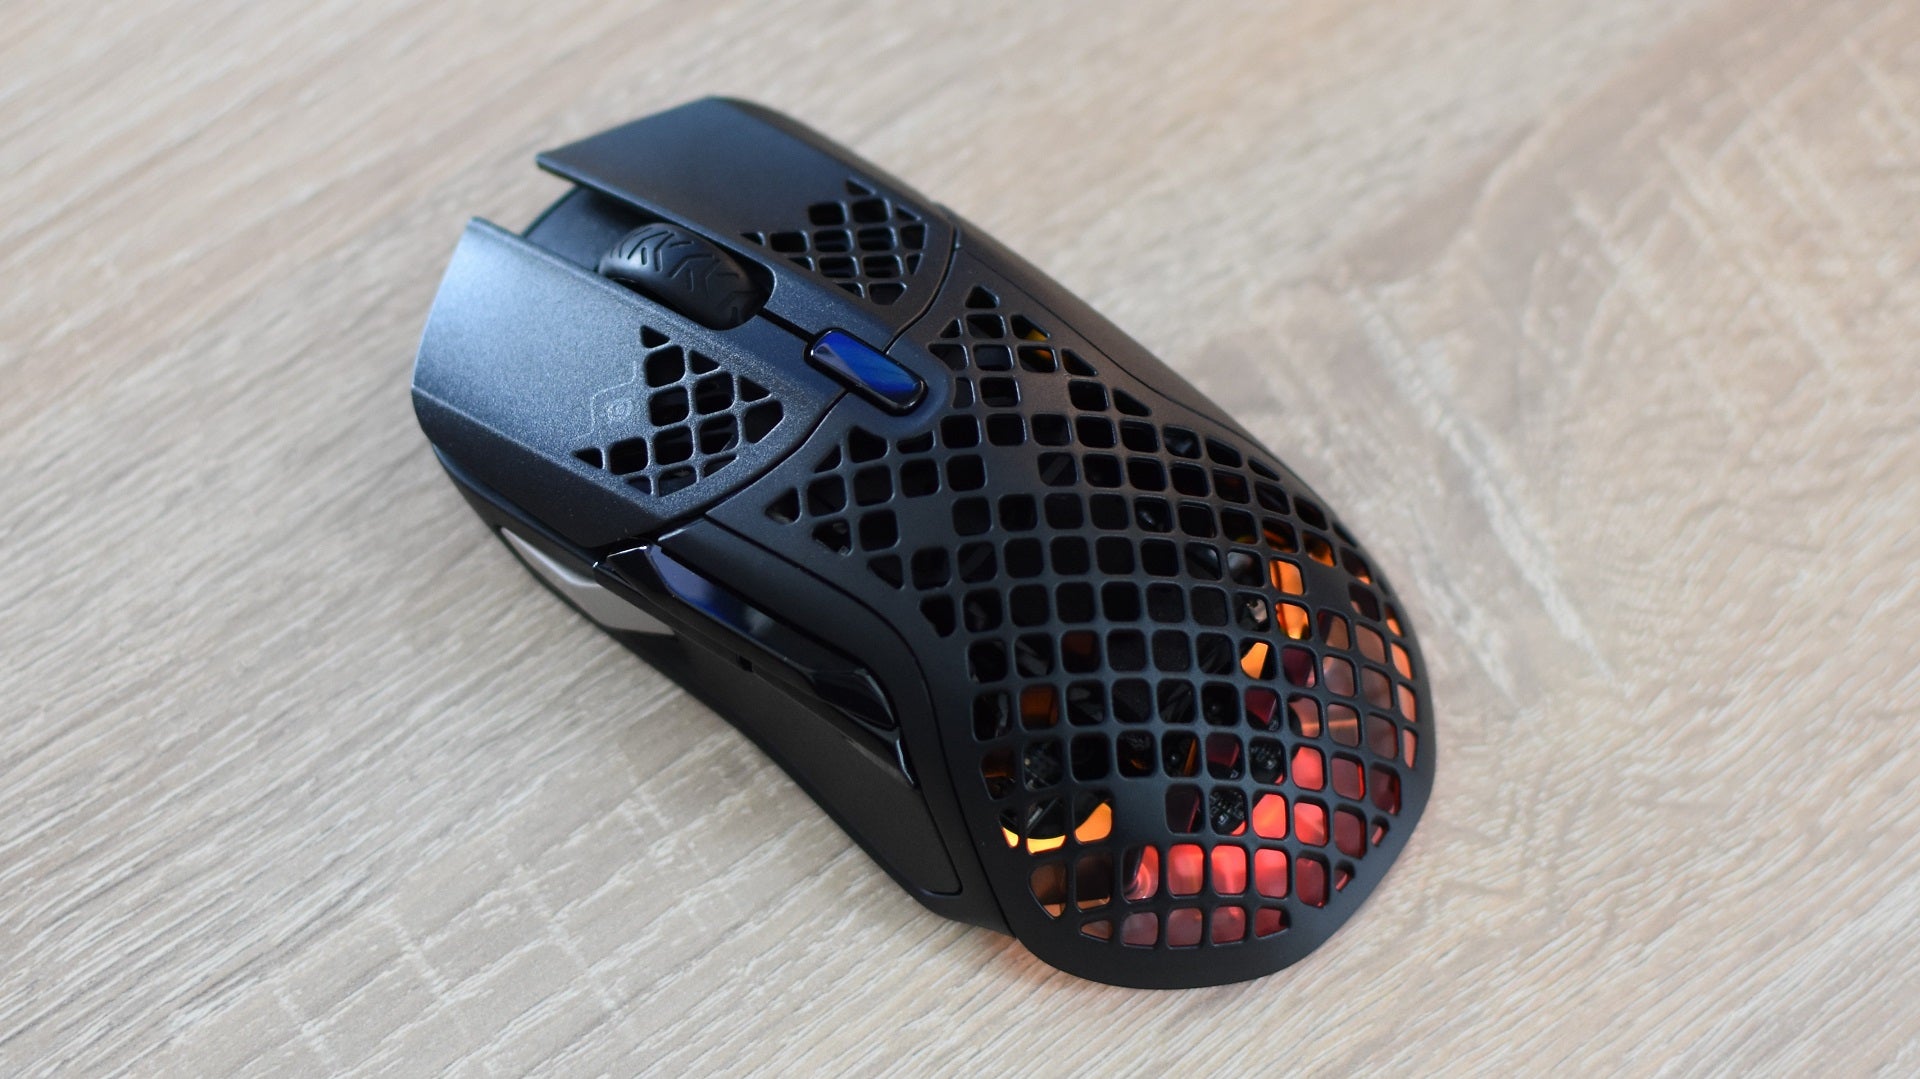 Mouse dan headset SteelSeries didiskon di Amazon UK